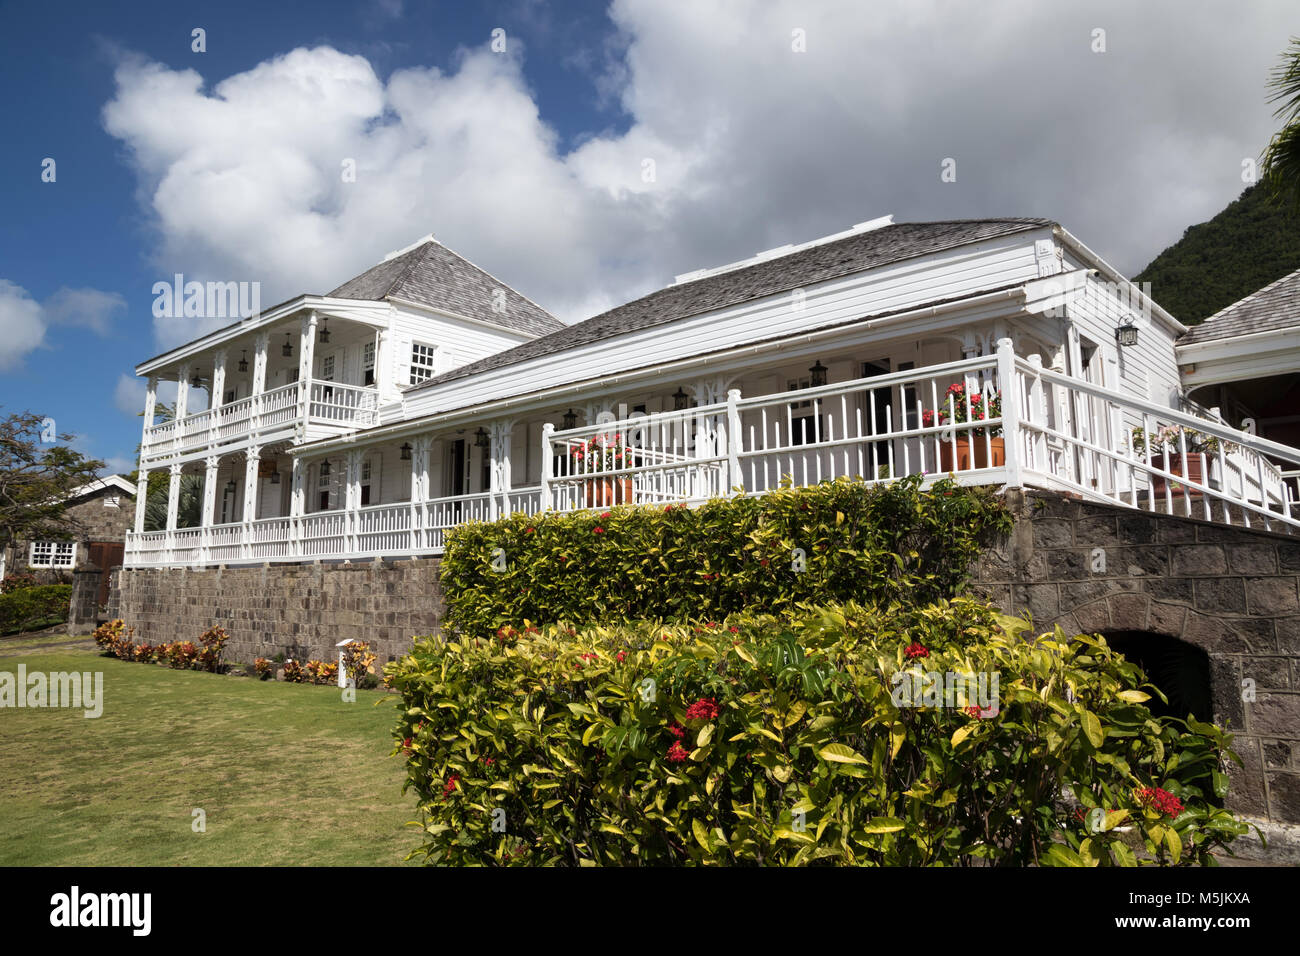 The veranda of the Fairview Great House on St Kitts overlooking the Botanical Garden Stock Photo